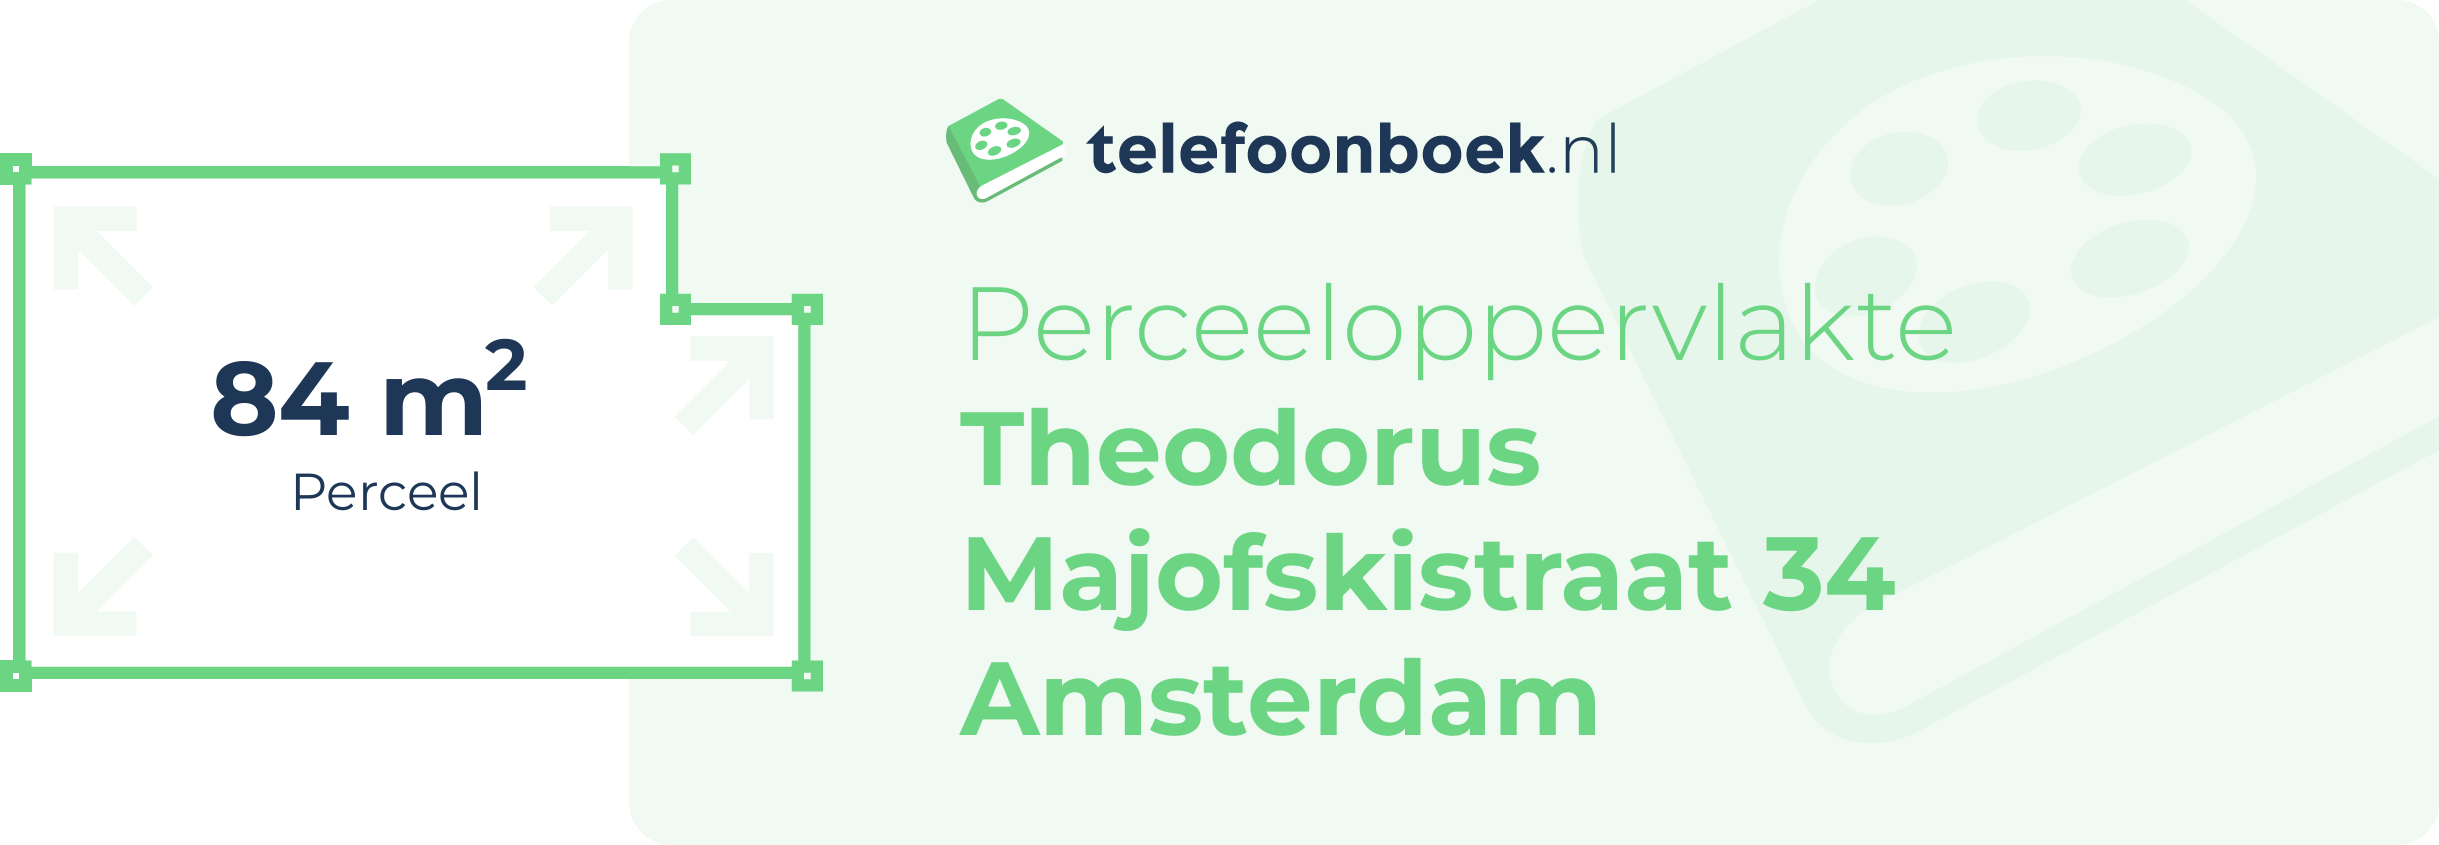 Perceeloppervlakte Theodorus Majofskistraat 34 Amsterdam